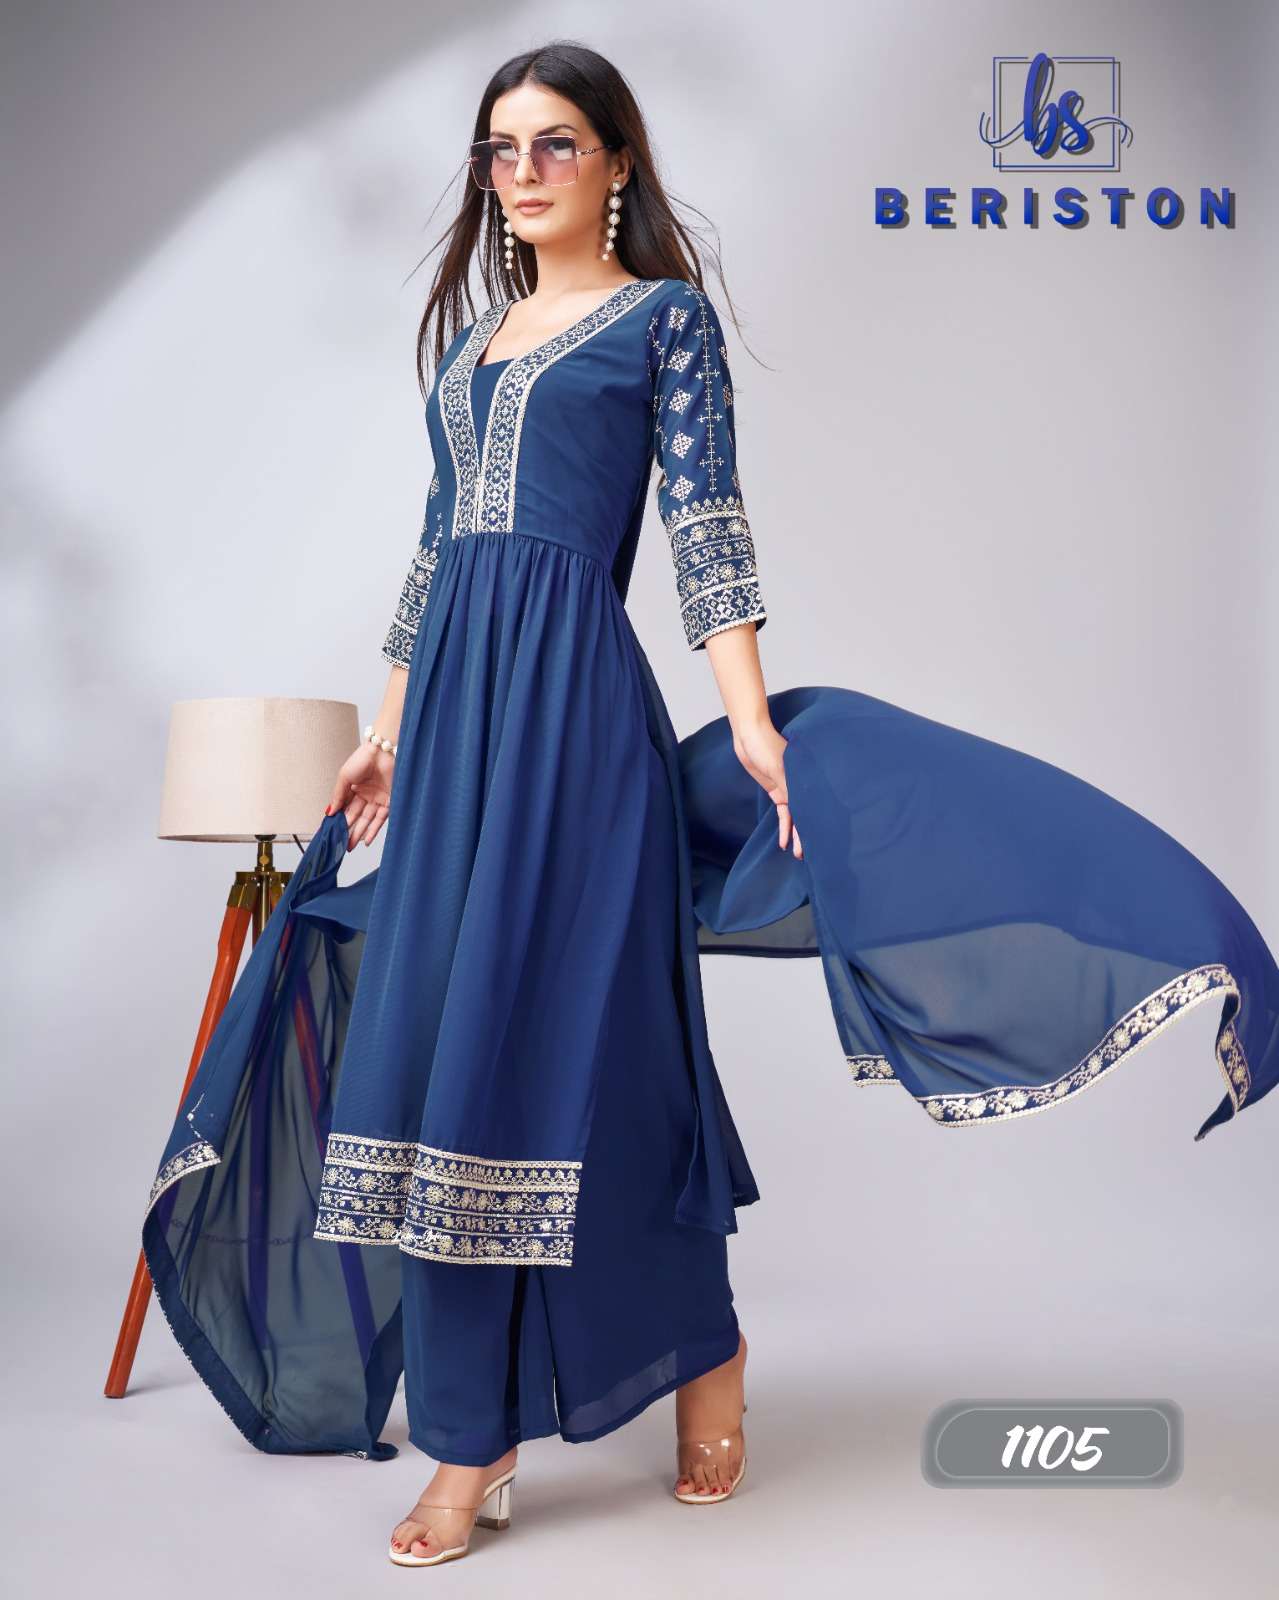 beriston bs vol 11 georgette elegant top bottom with dupatta catalog